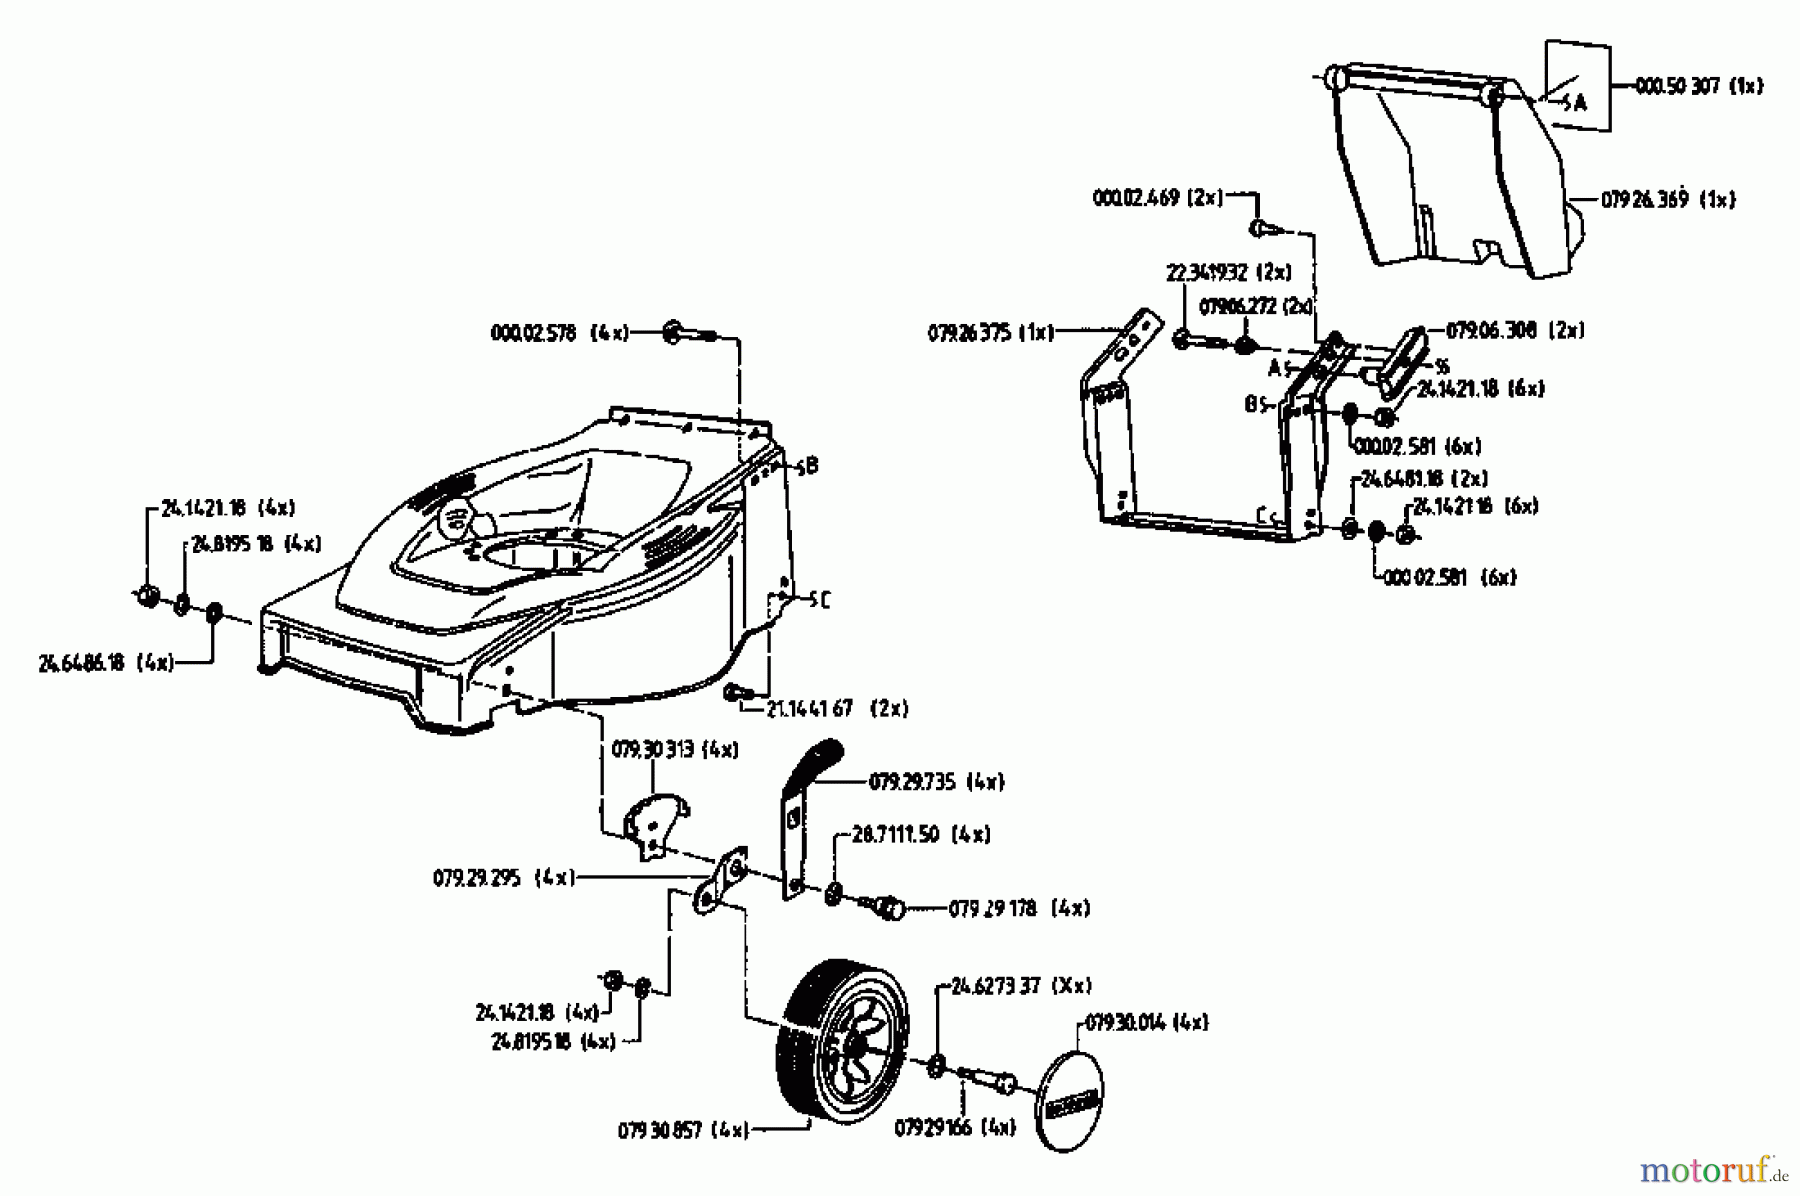  Gutbrod Petrol mower HB 48 02814.03  (1994) Basic machine